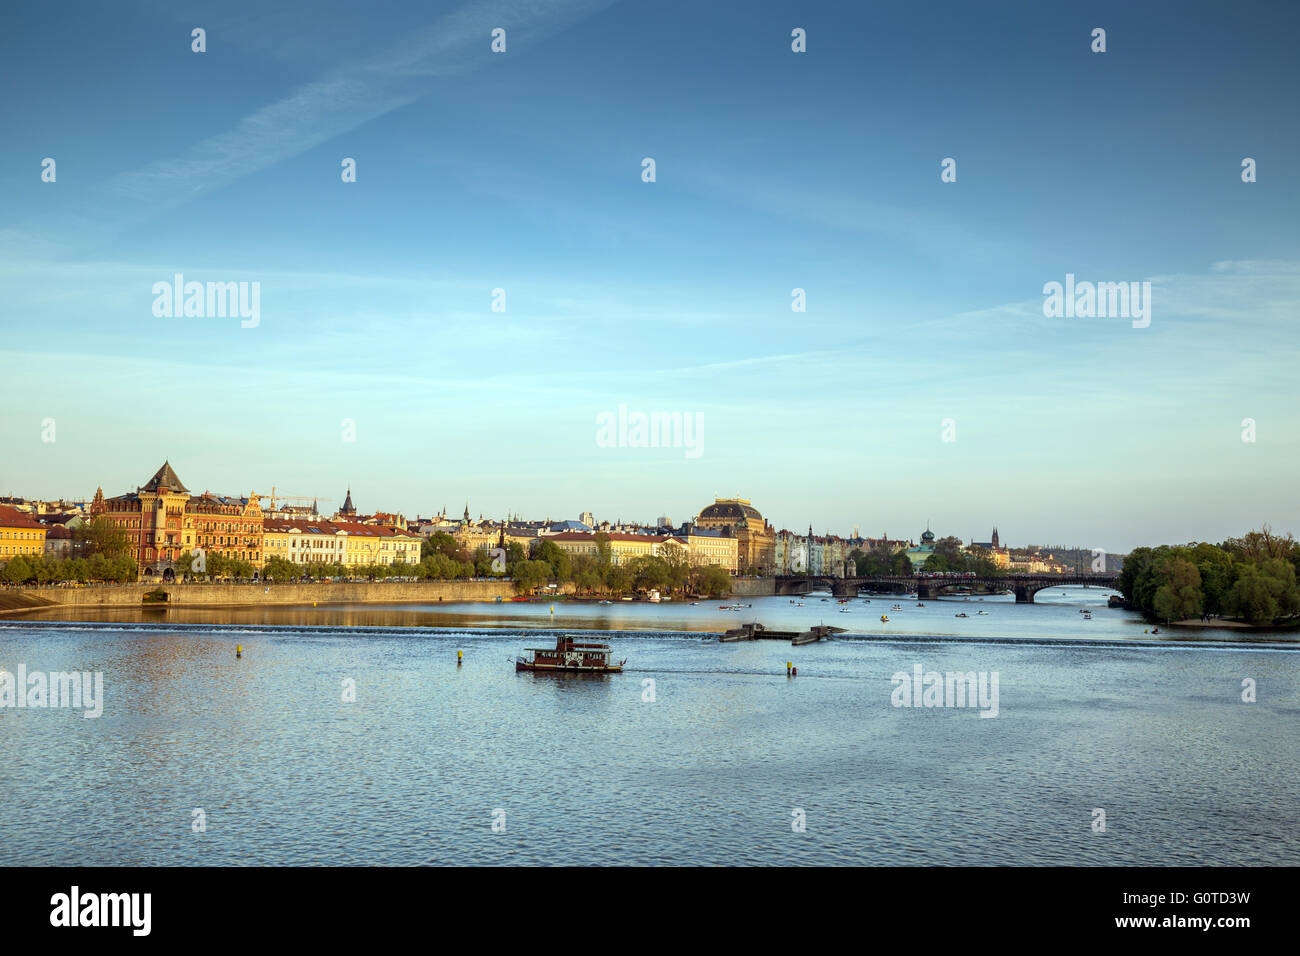 Smetanovo nabrezi, National theater and the Vltava river at sunset, Bohemia, Czech Republic, Europe Stock Photo